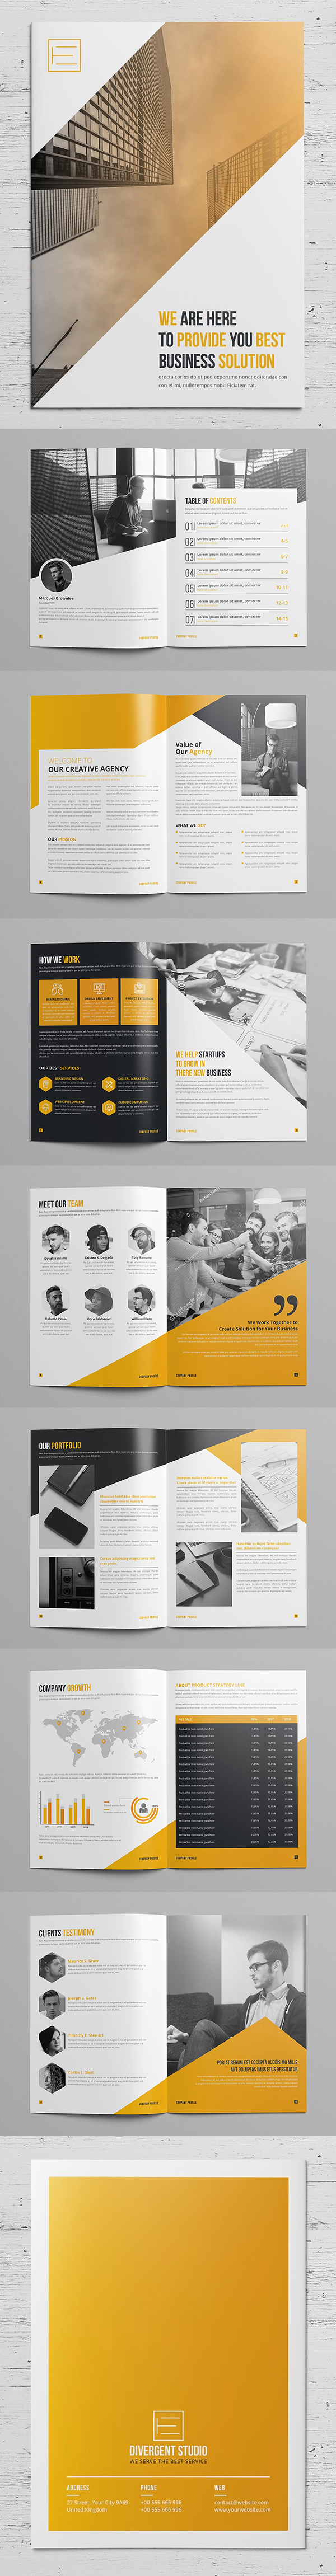 100 Professional Corporate Brochure Templates - 52